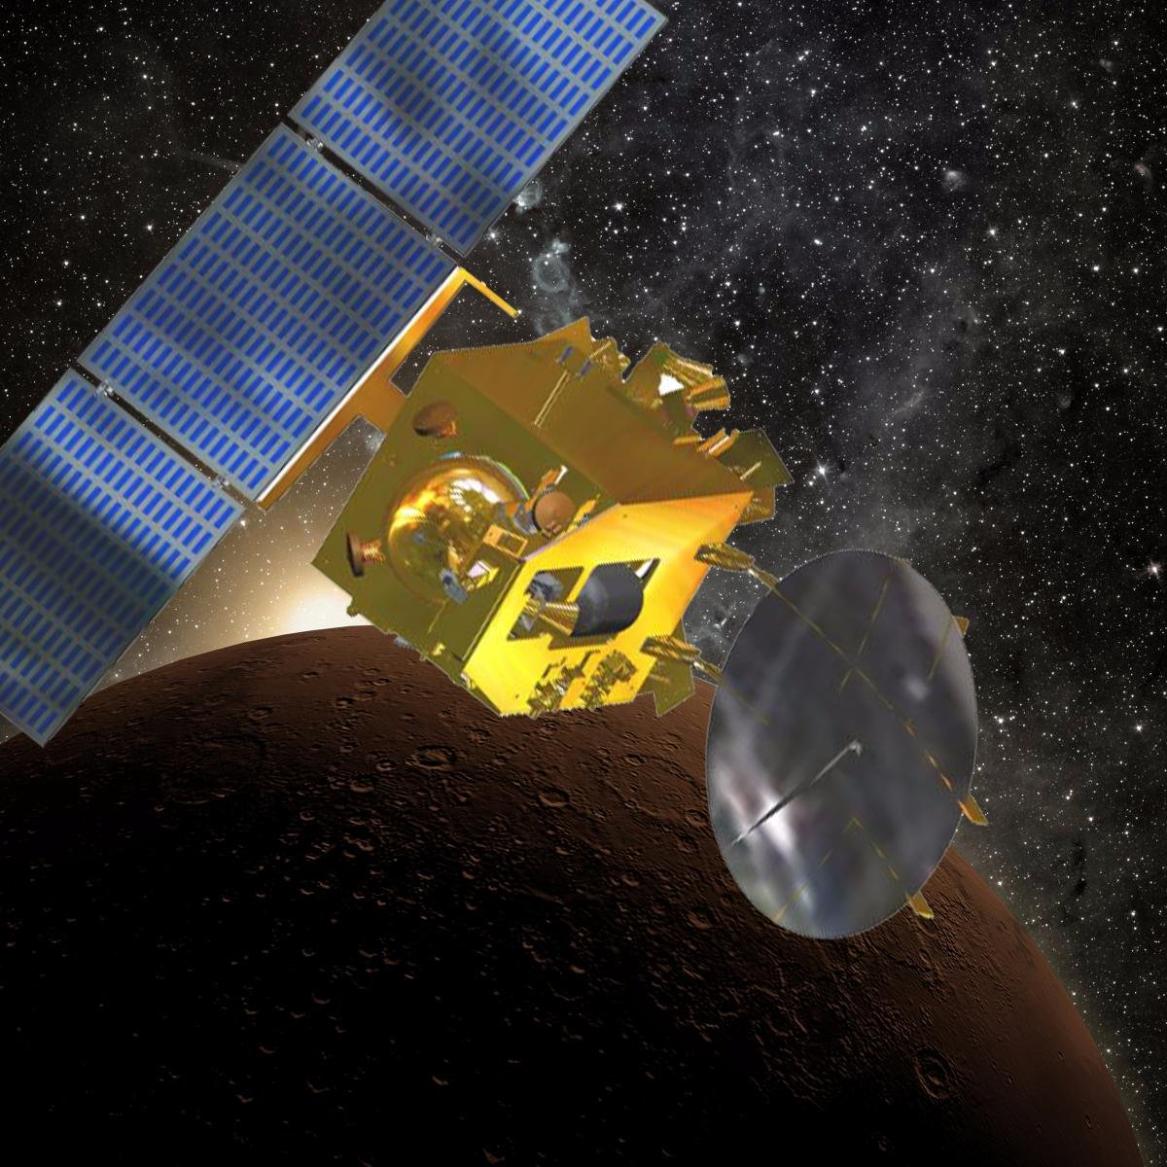 ISRO's Mars Orbiter